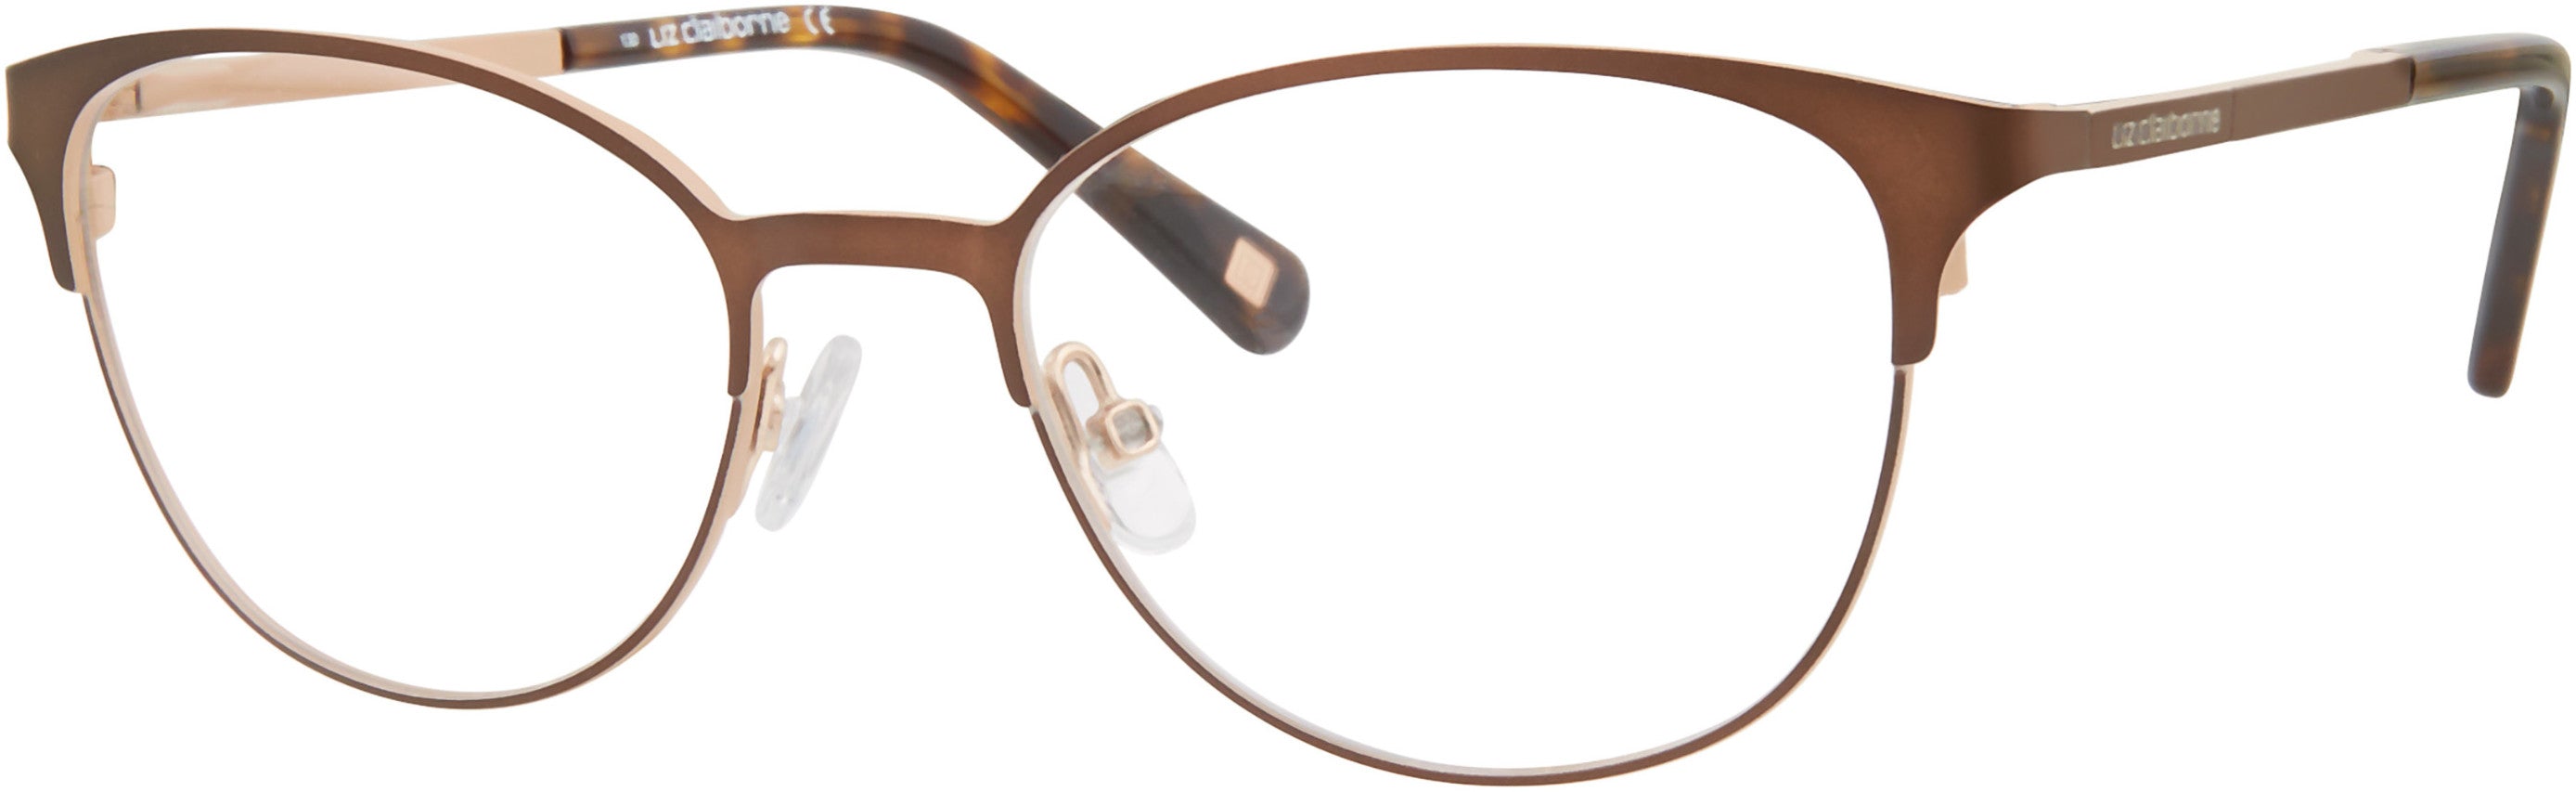  Liz Claiborne 445 Oval Modified Eyeglasses 04IN-04IN  Matte Brown (00 Demo Lens)